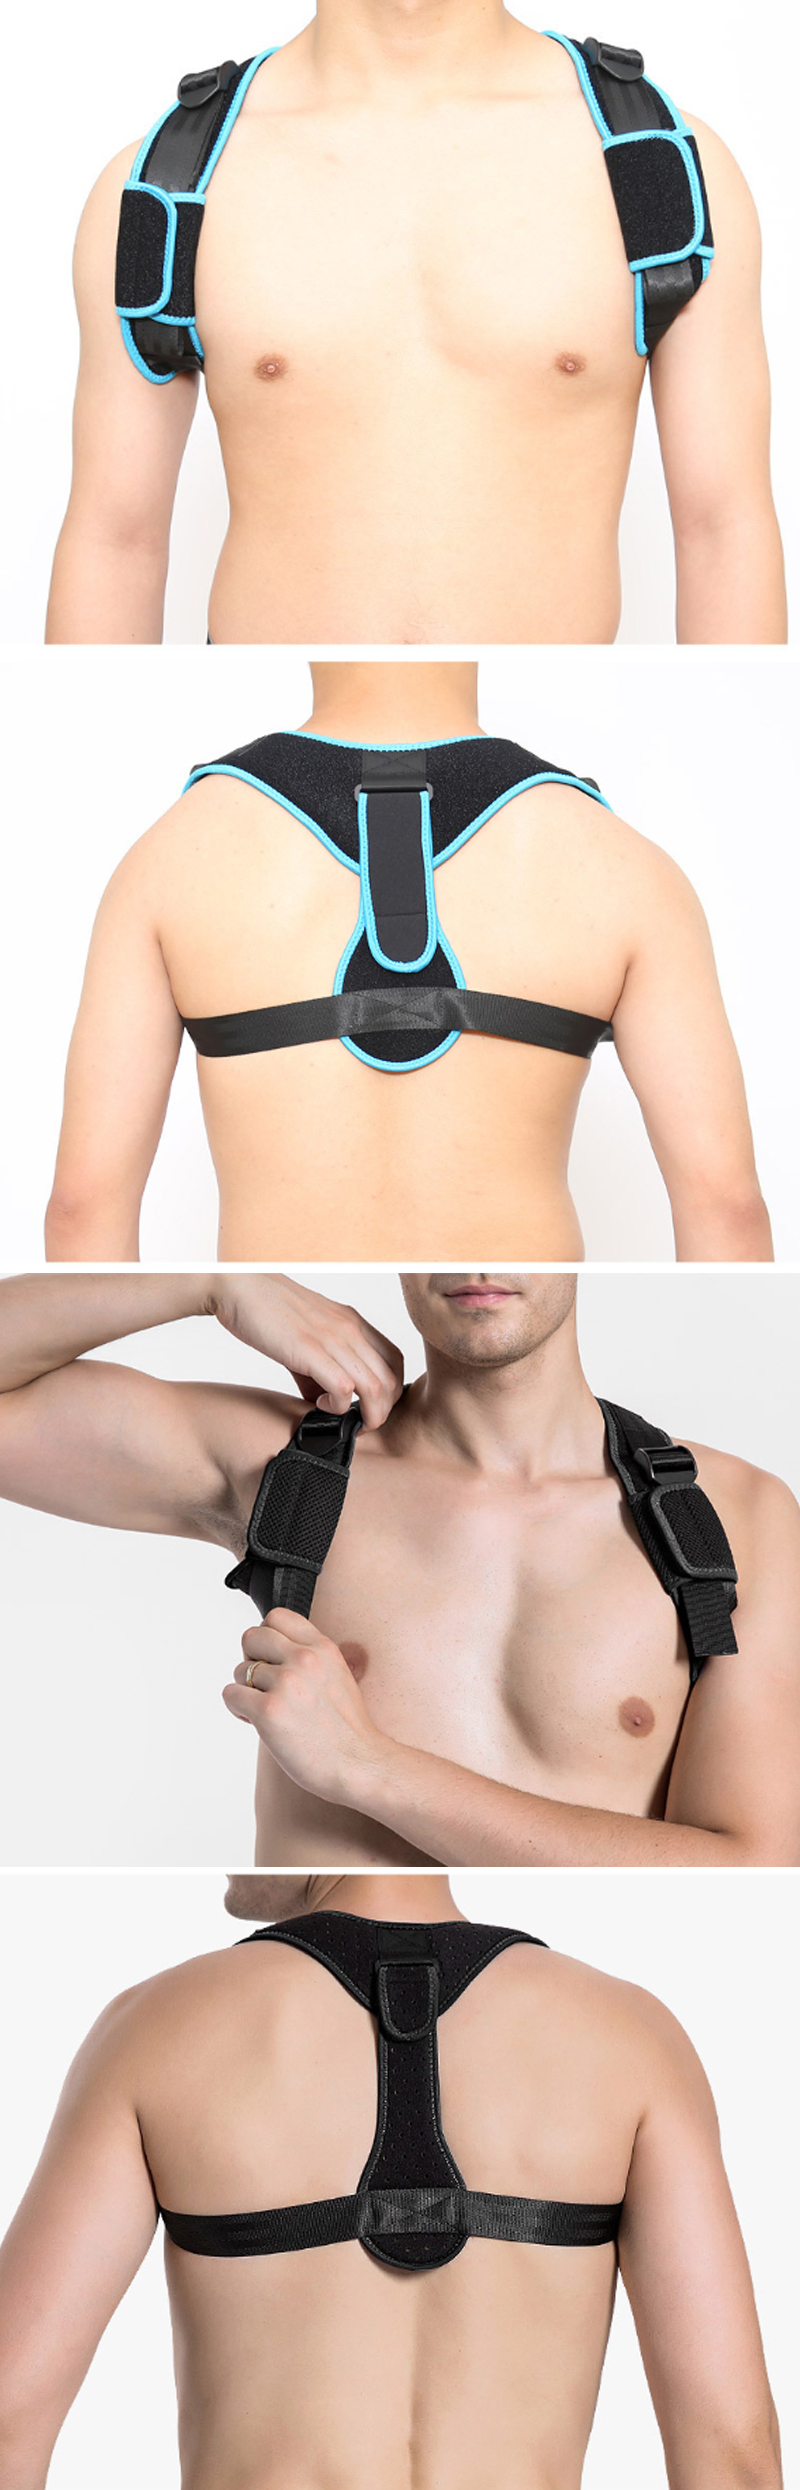 KALOAD-Humpback-Correction-Belt-Adjustable-Posture-Corrector-Pain-Relief-Back-Support-Sports-Protect-1450735-2